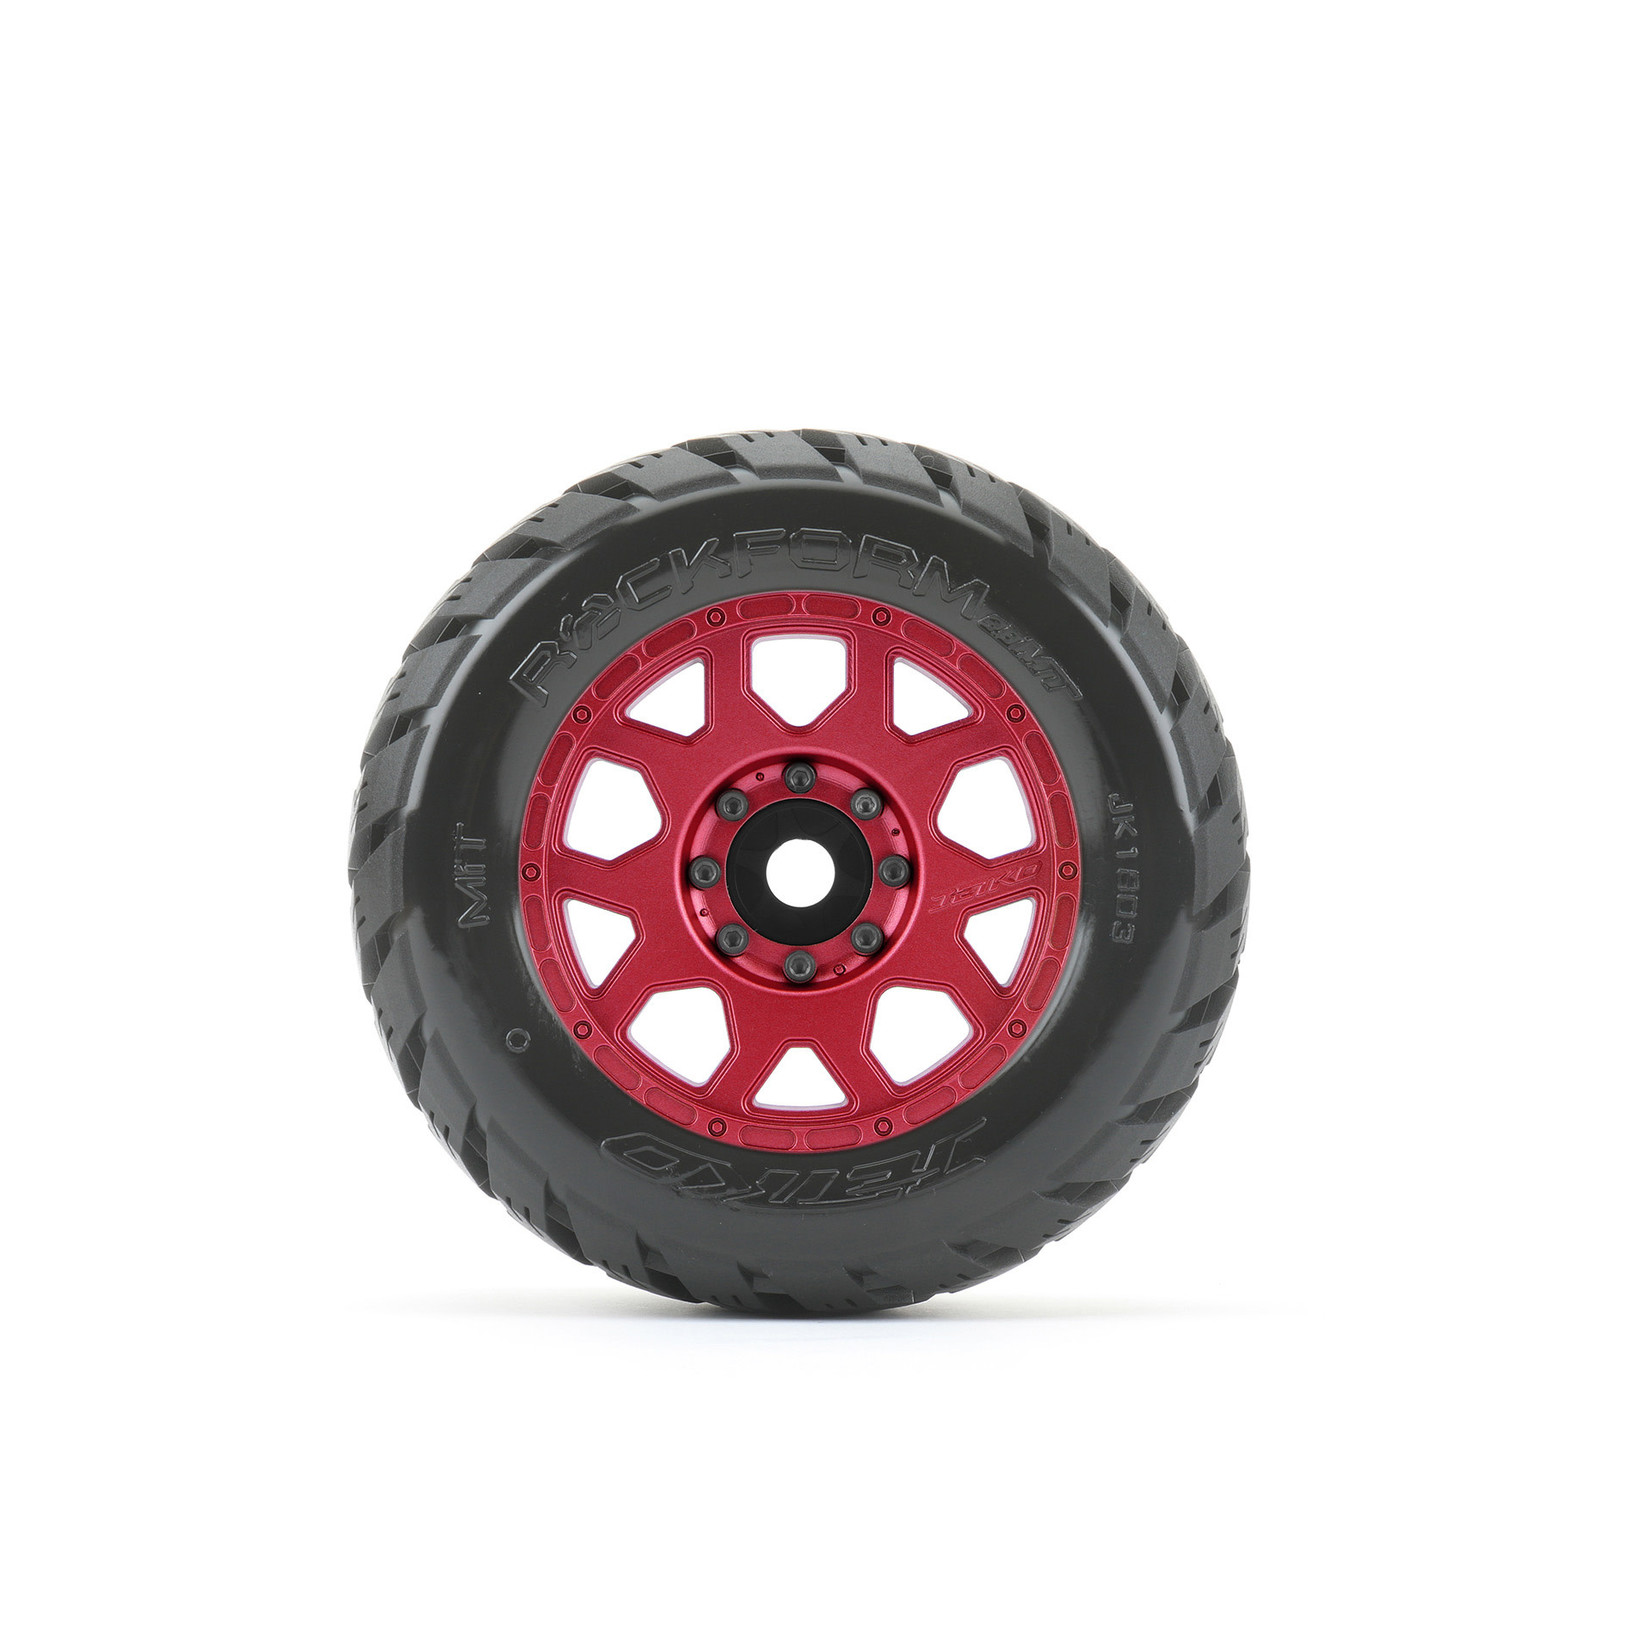 Jetko Tires Jetko Tires 1/8 MT 3.8 EX-Rockform, Mounted on Metal Red Claw Rim, Medium Soft, Belted, Glued, 17mm 1/2" Offset #JKO1803CRMSGBB2